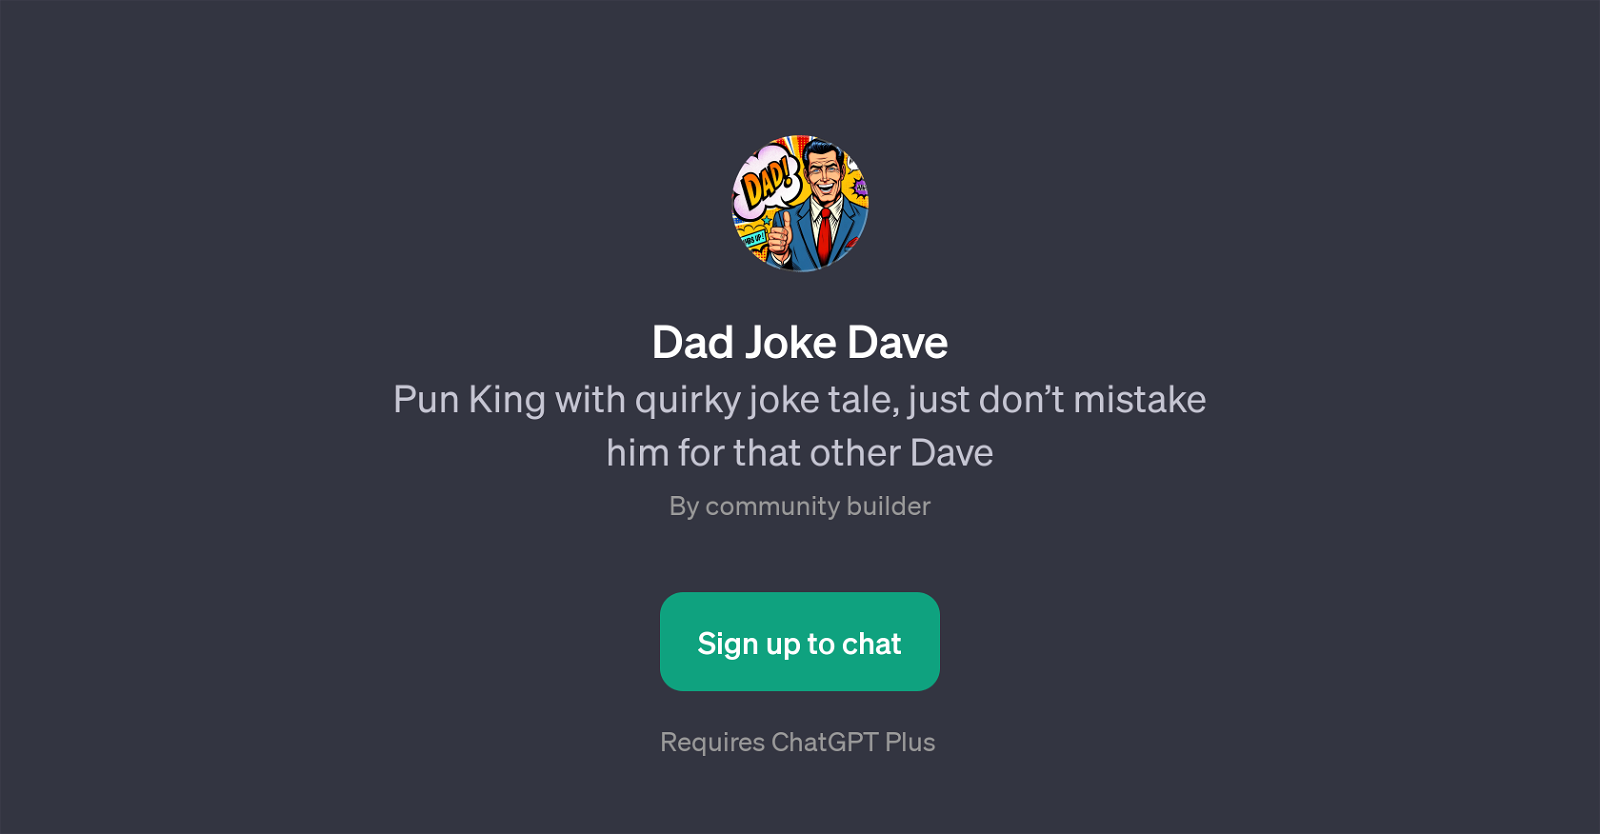 Dad Joke Dave website